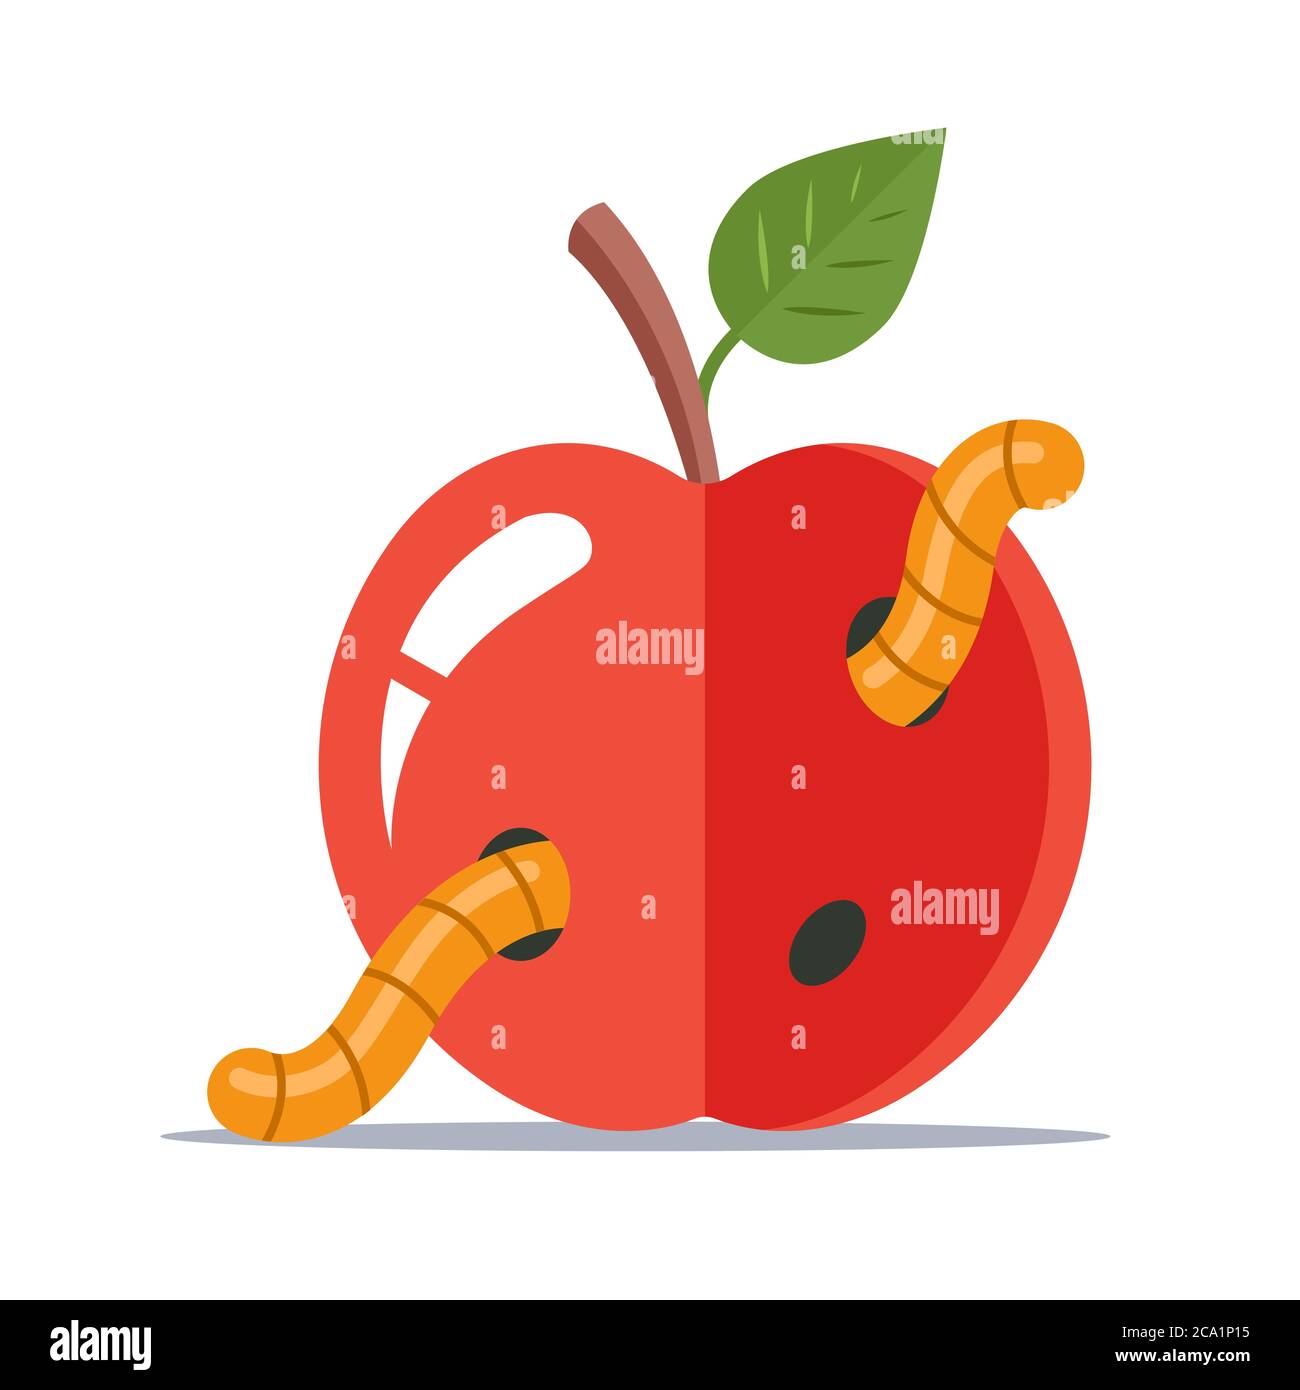 Wormy roten Apfel mit einem grünen Blatt. Flache Vektor-Illustration. Stock Vektor